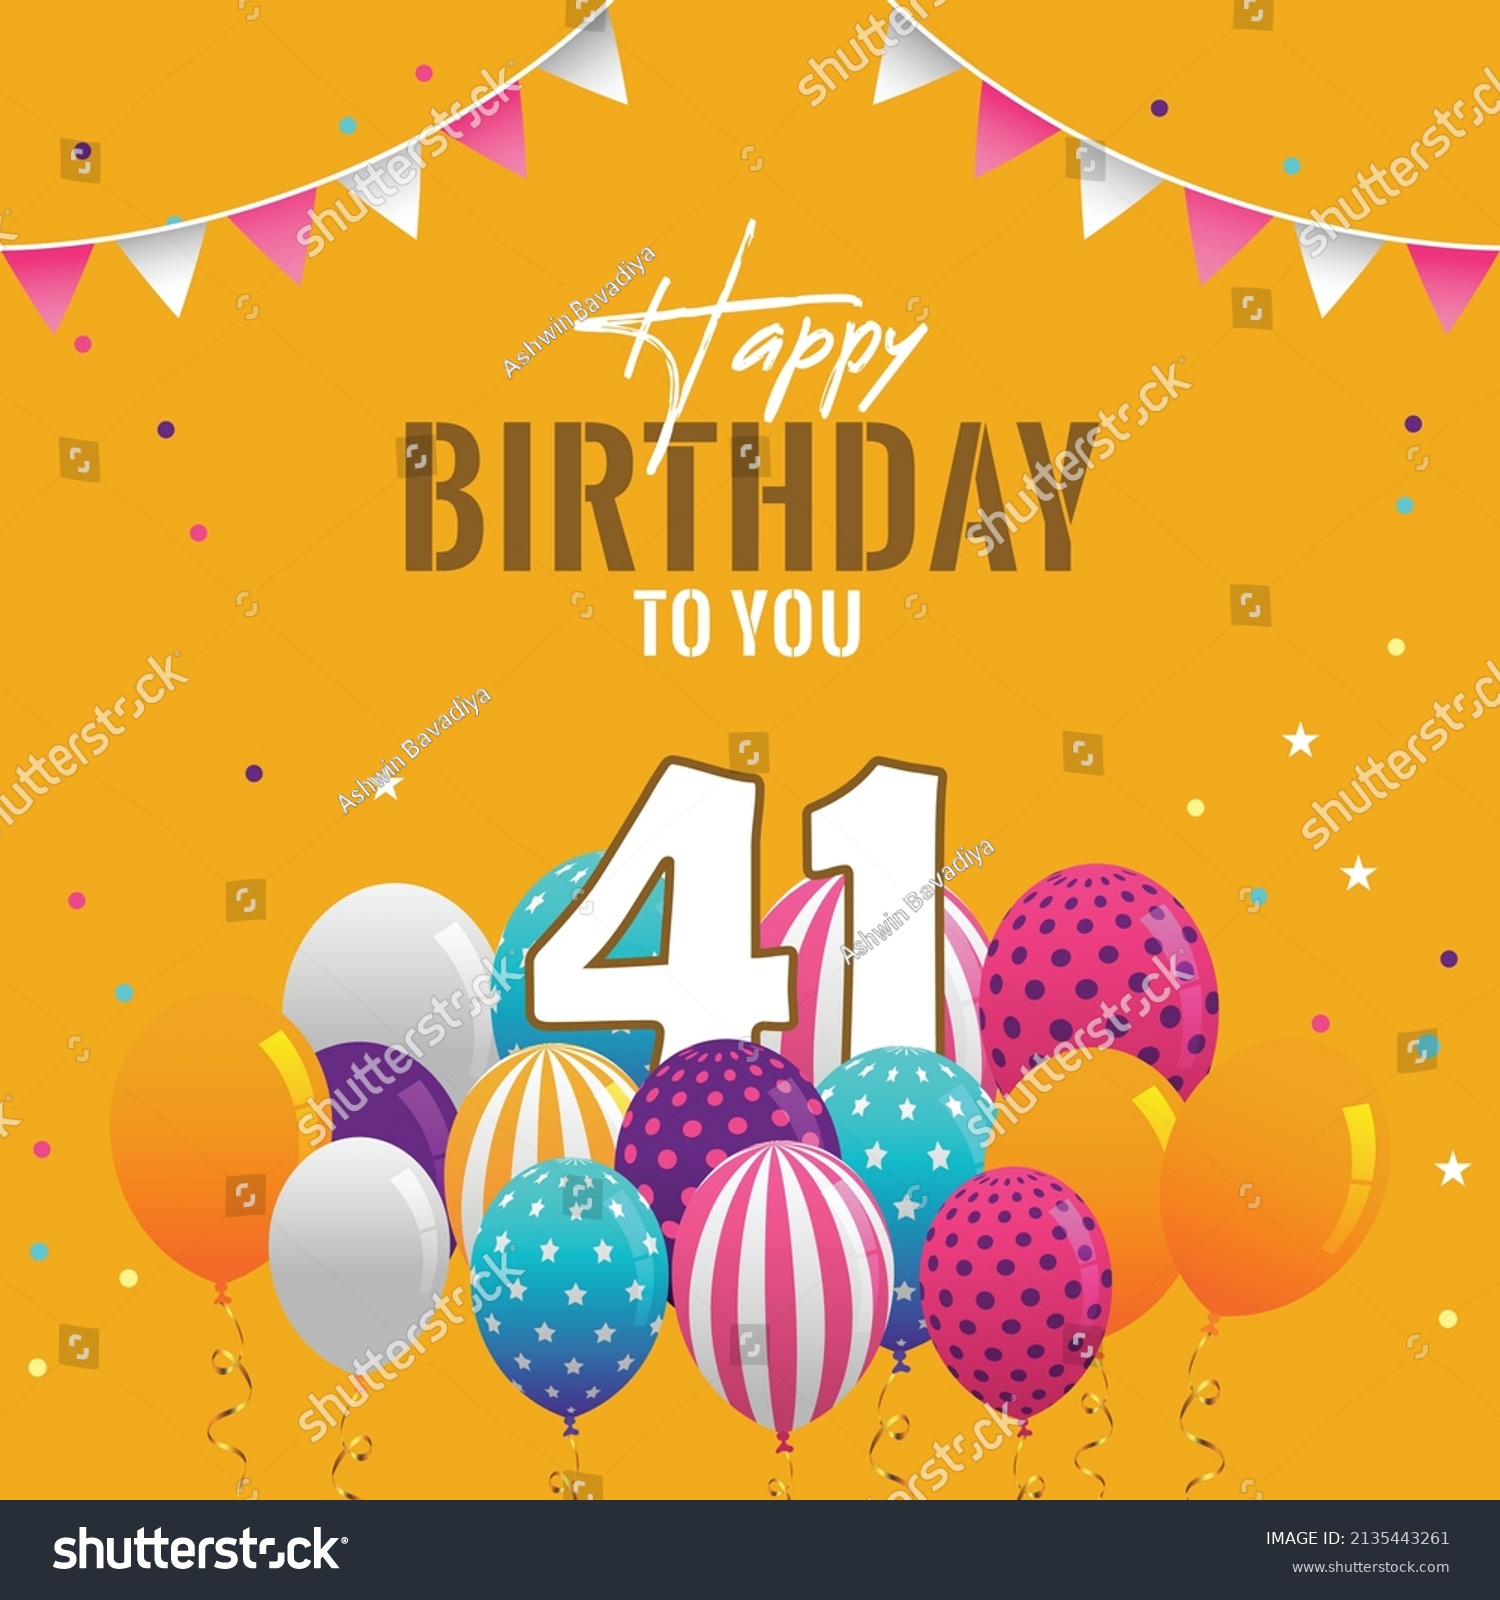 Happy 41st Birthday Greeting Card Vector Royalty Free Stock Vector 2135443261 